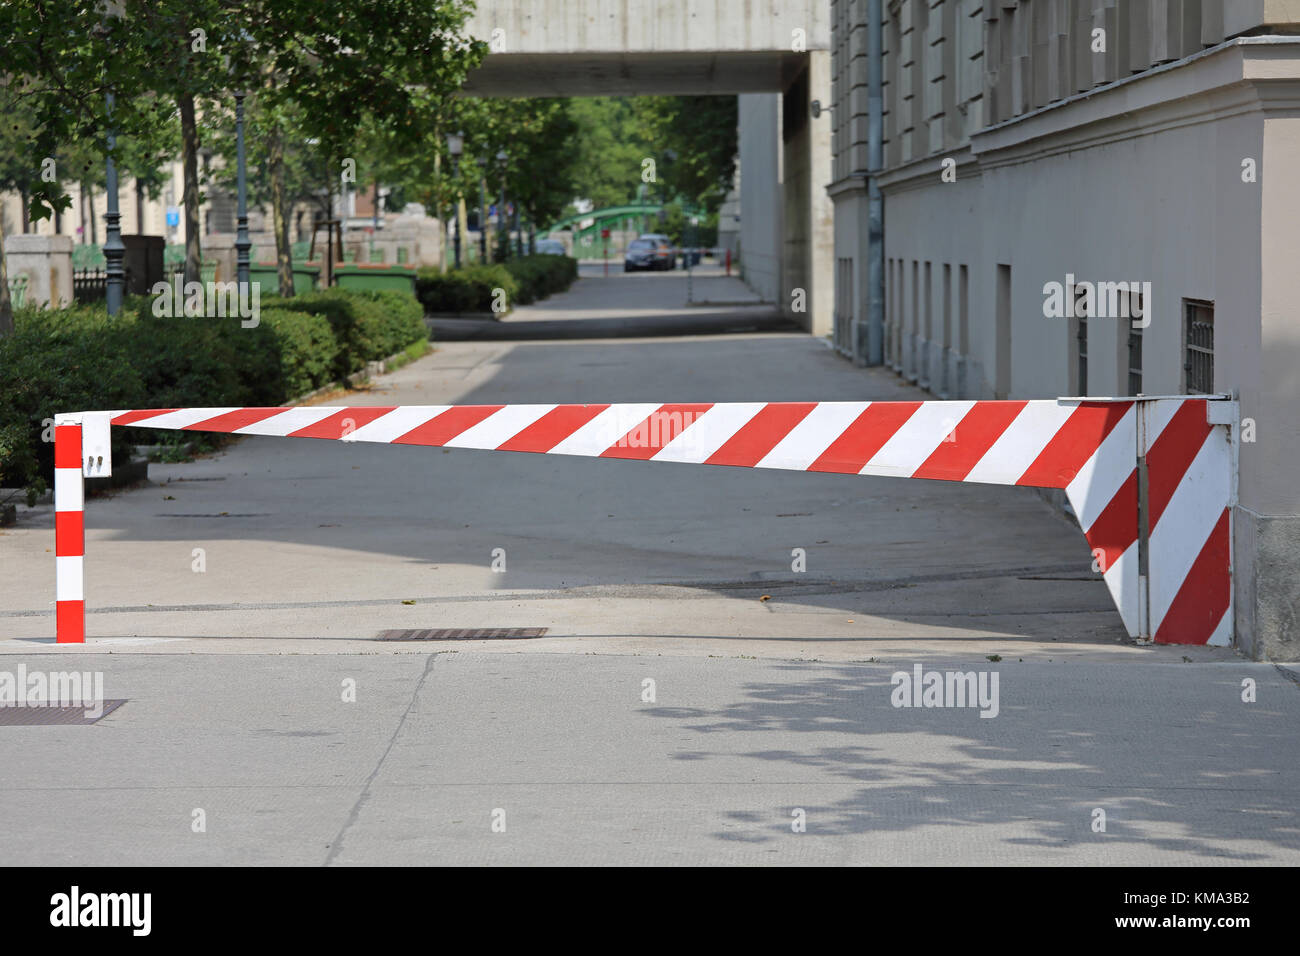 Geschlossener Parkplatz schranke Rampe in Wien Stockfotografie - Alamy